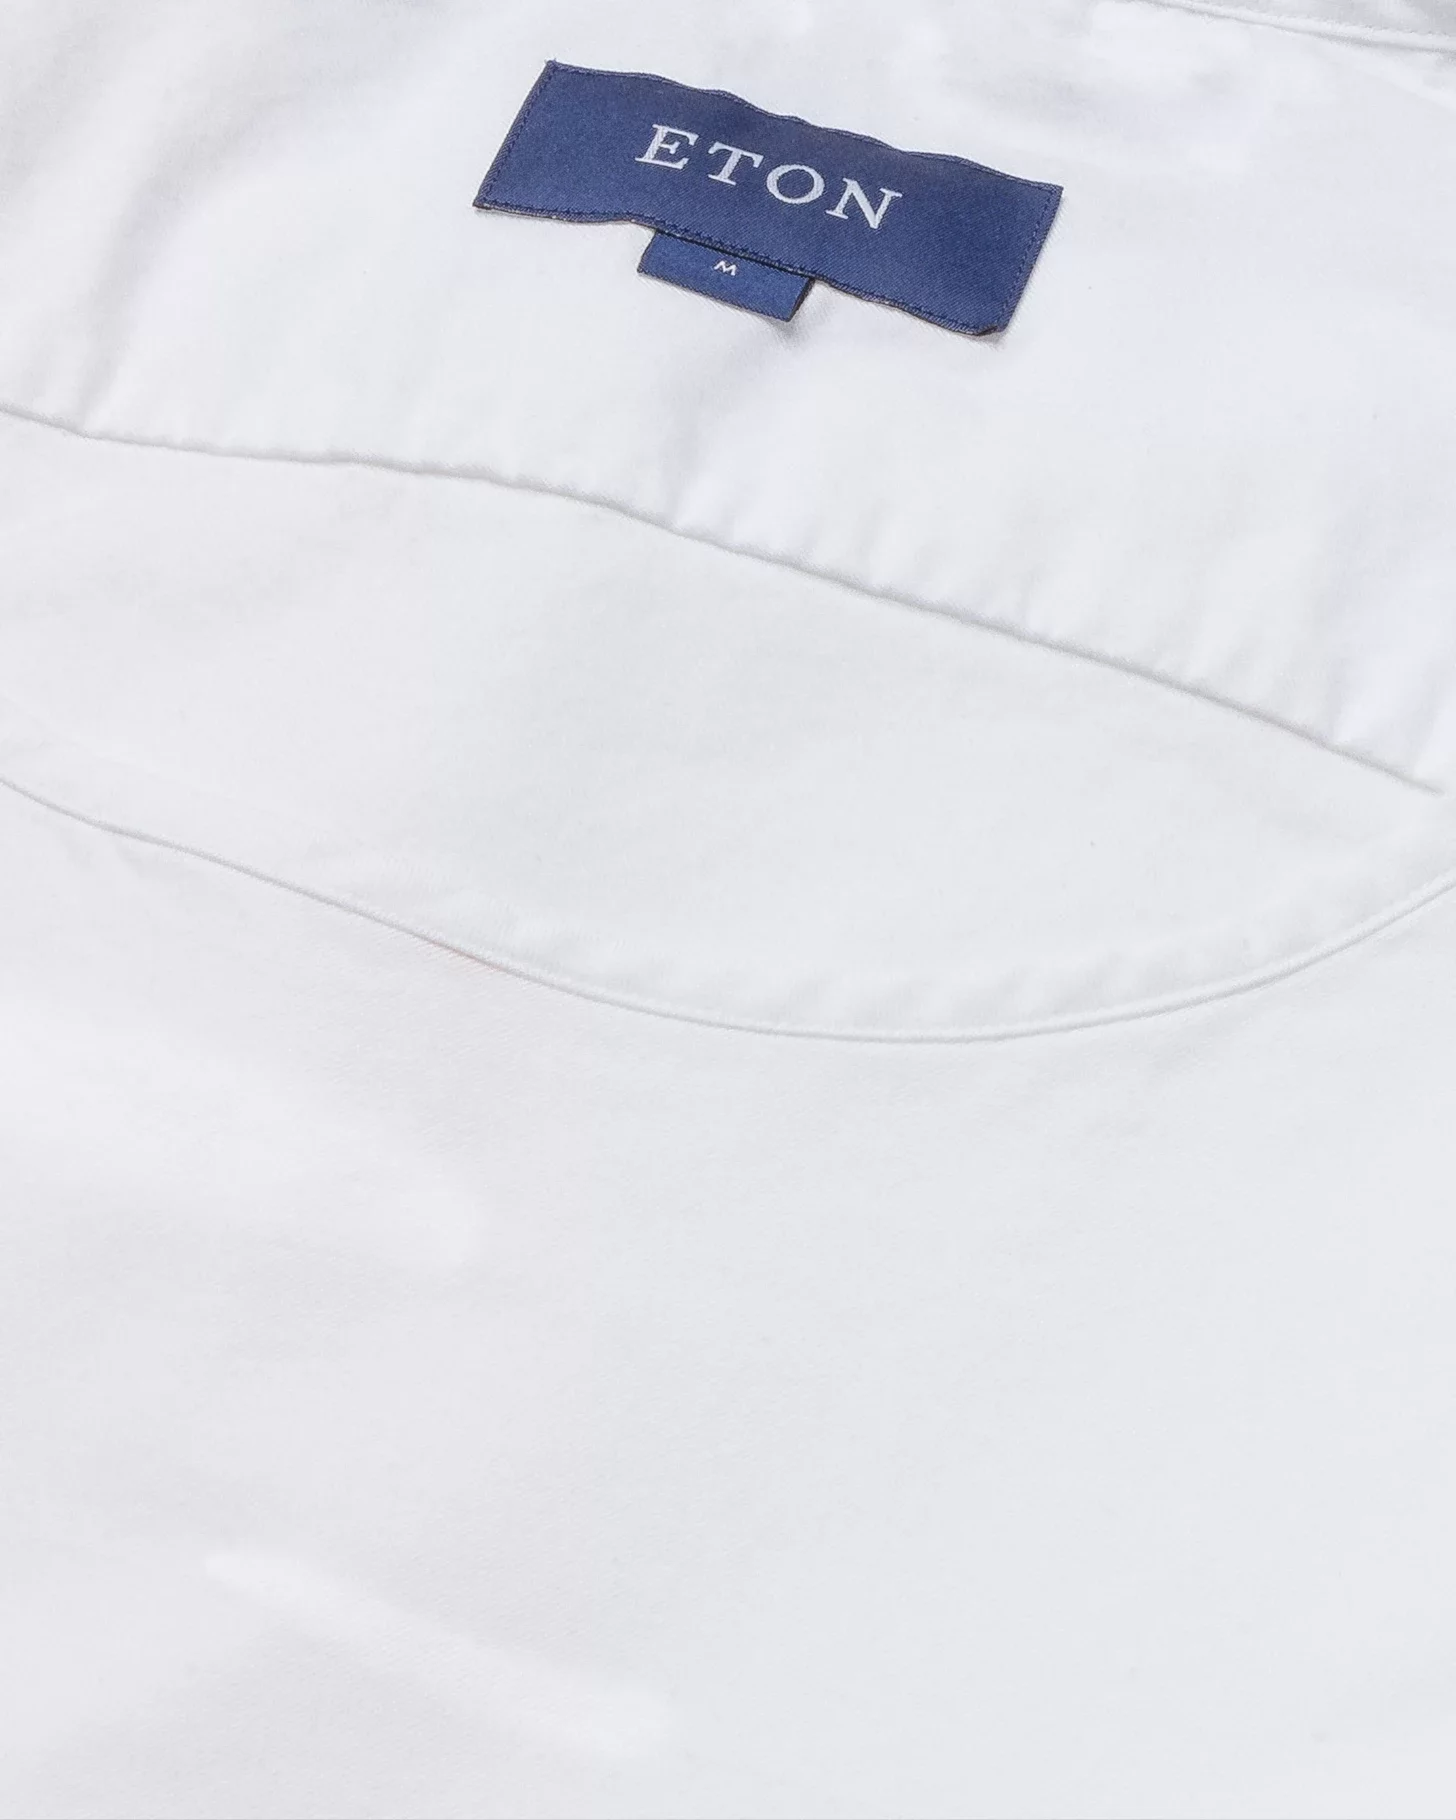 Eton - white t shirt in woven twill